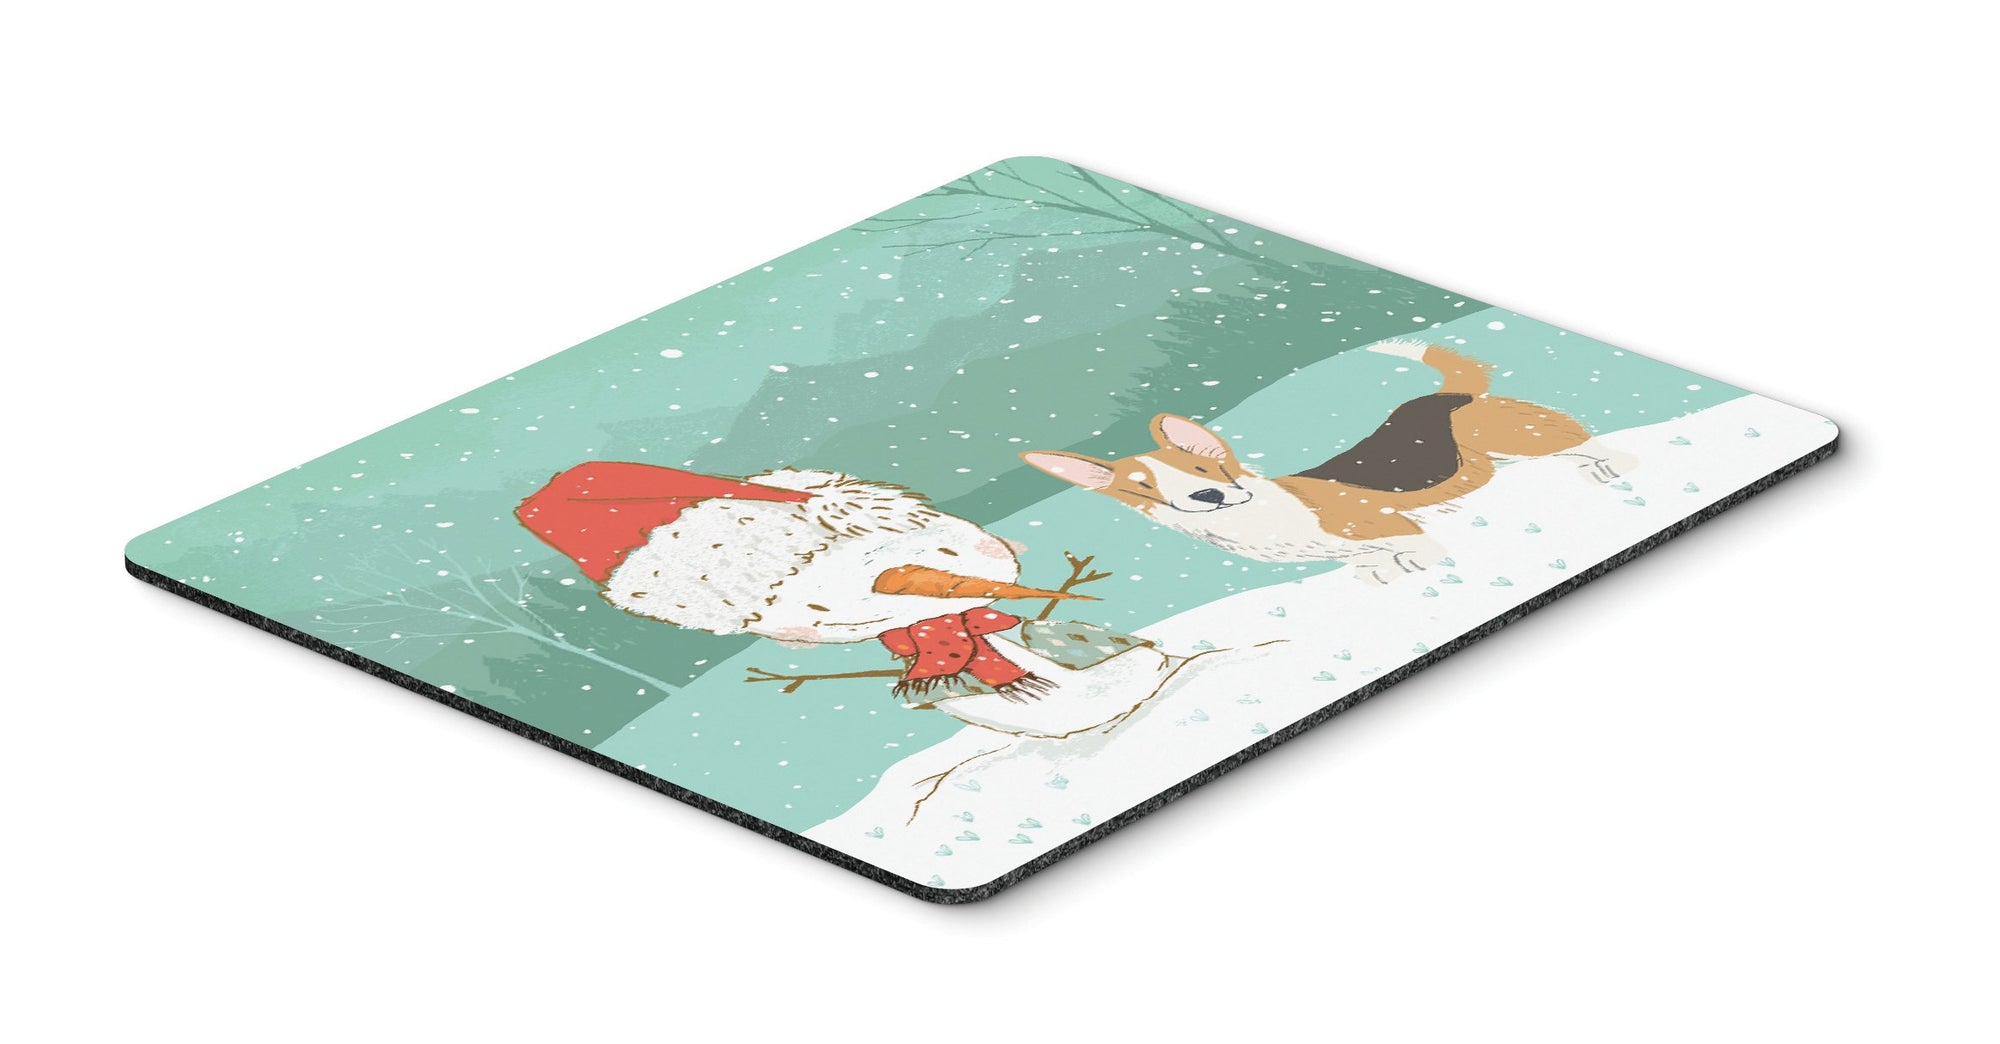 Tricolor Cardigan Corgi Snowman Christmas Mouse Pad, Hot Pad or Trivet CK2062MP by Caroline's Treasures